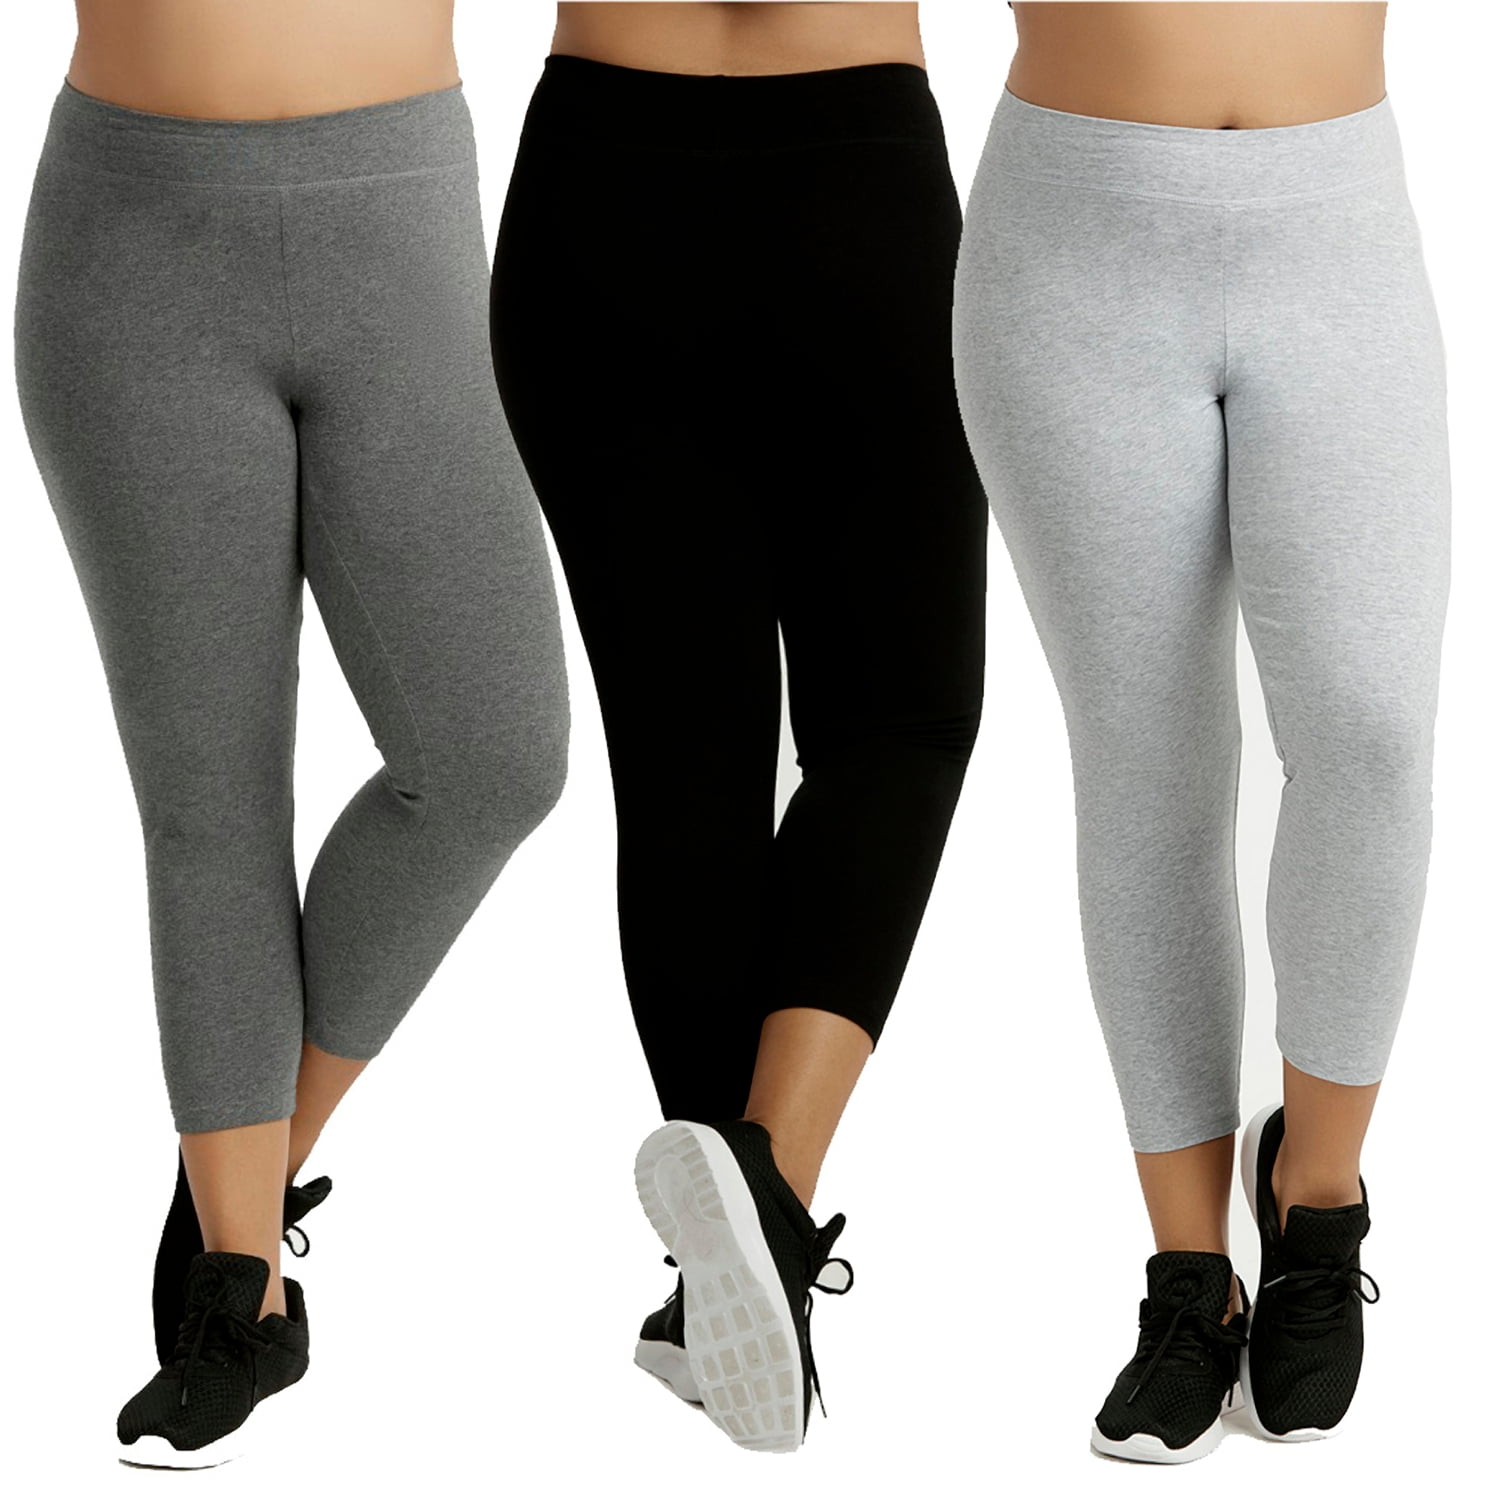 Sofra - Ladies Cotton Capri Leggings Plus Size - Walmart.com - Walmart.com